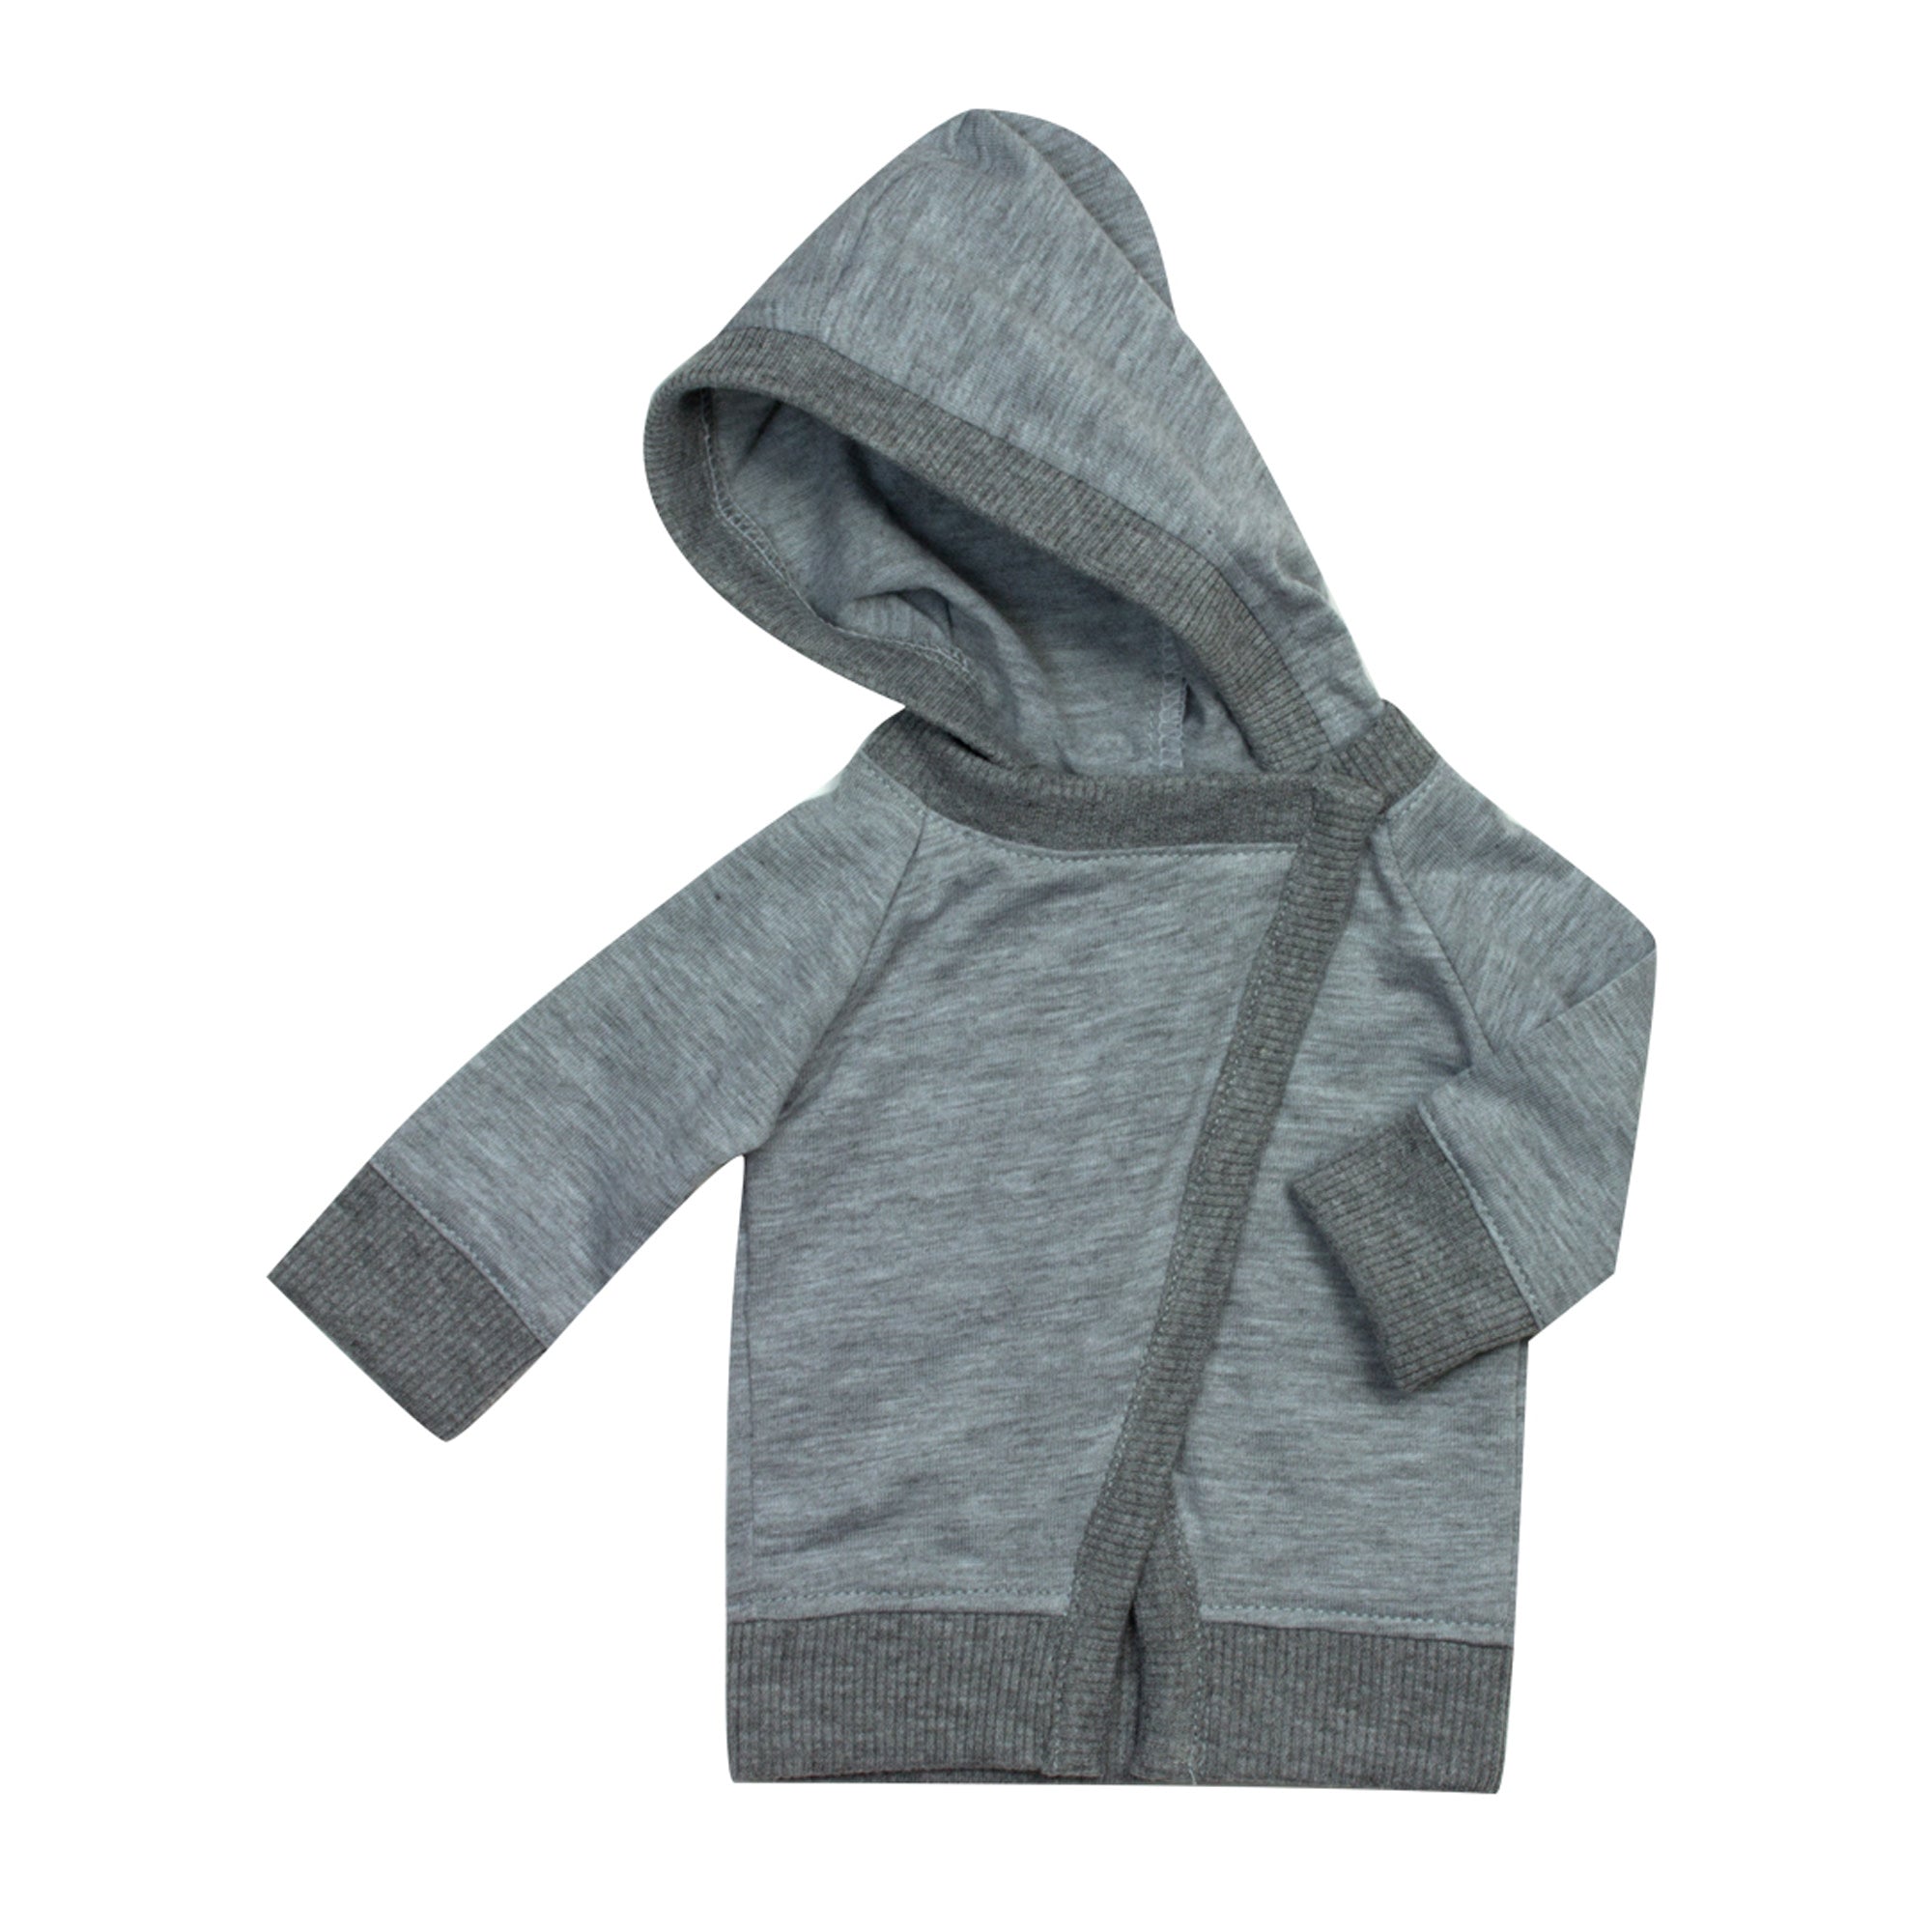 Sophia’s Modern Mix & Match Gender-Neutral Hooded Asymmetrical Sweater Jacket for 18” Dolls, Gray